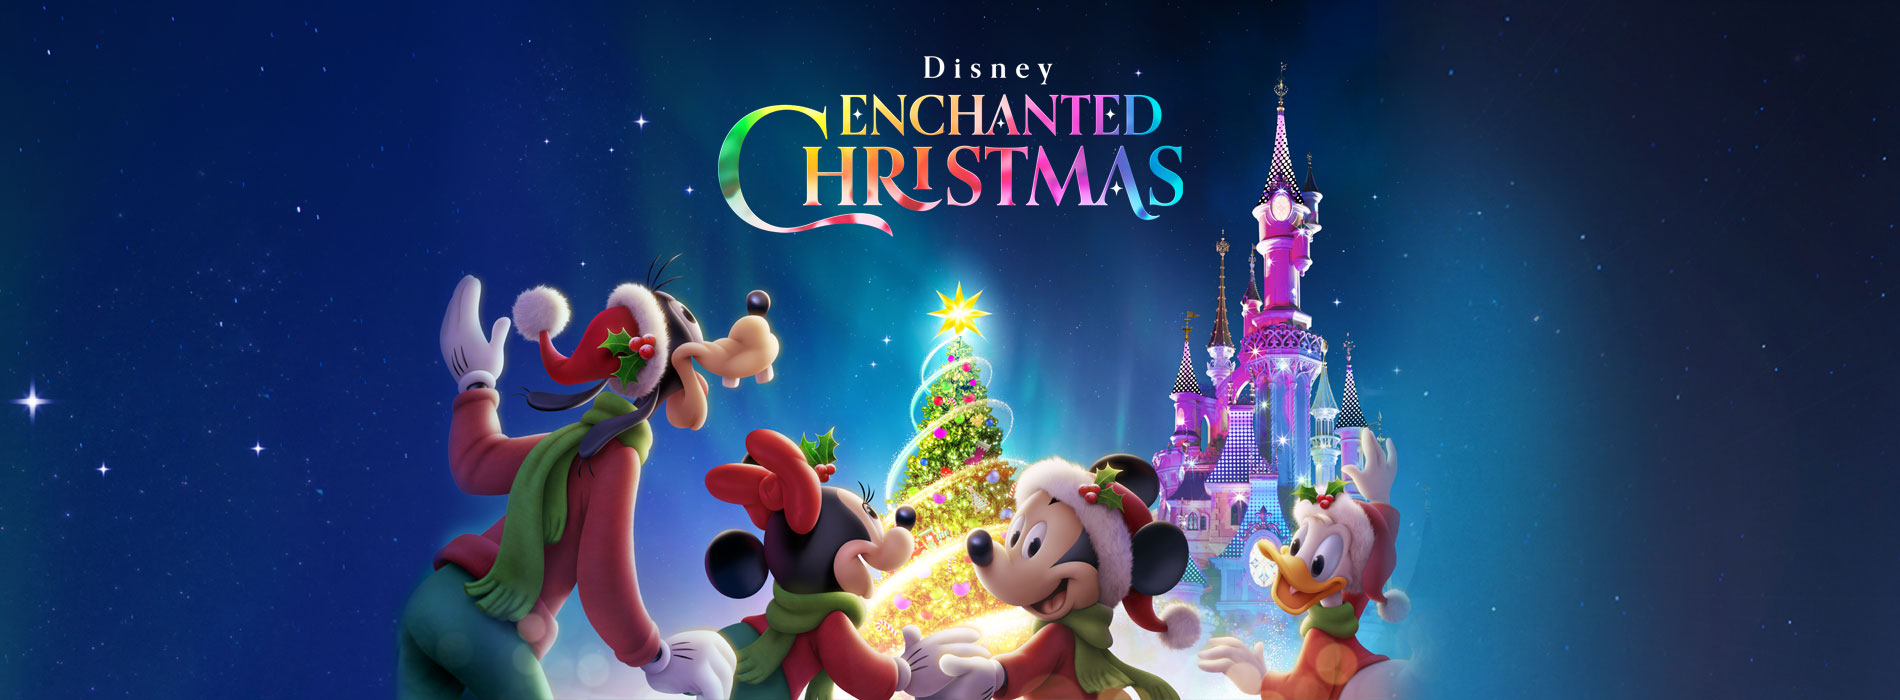 Disney's Enchanted Christmas